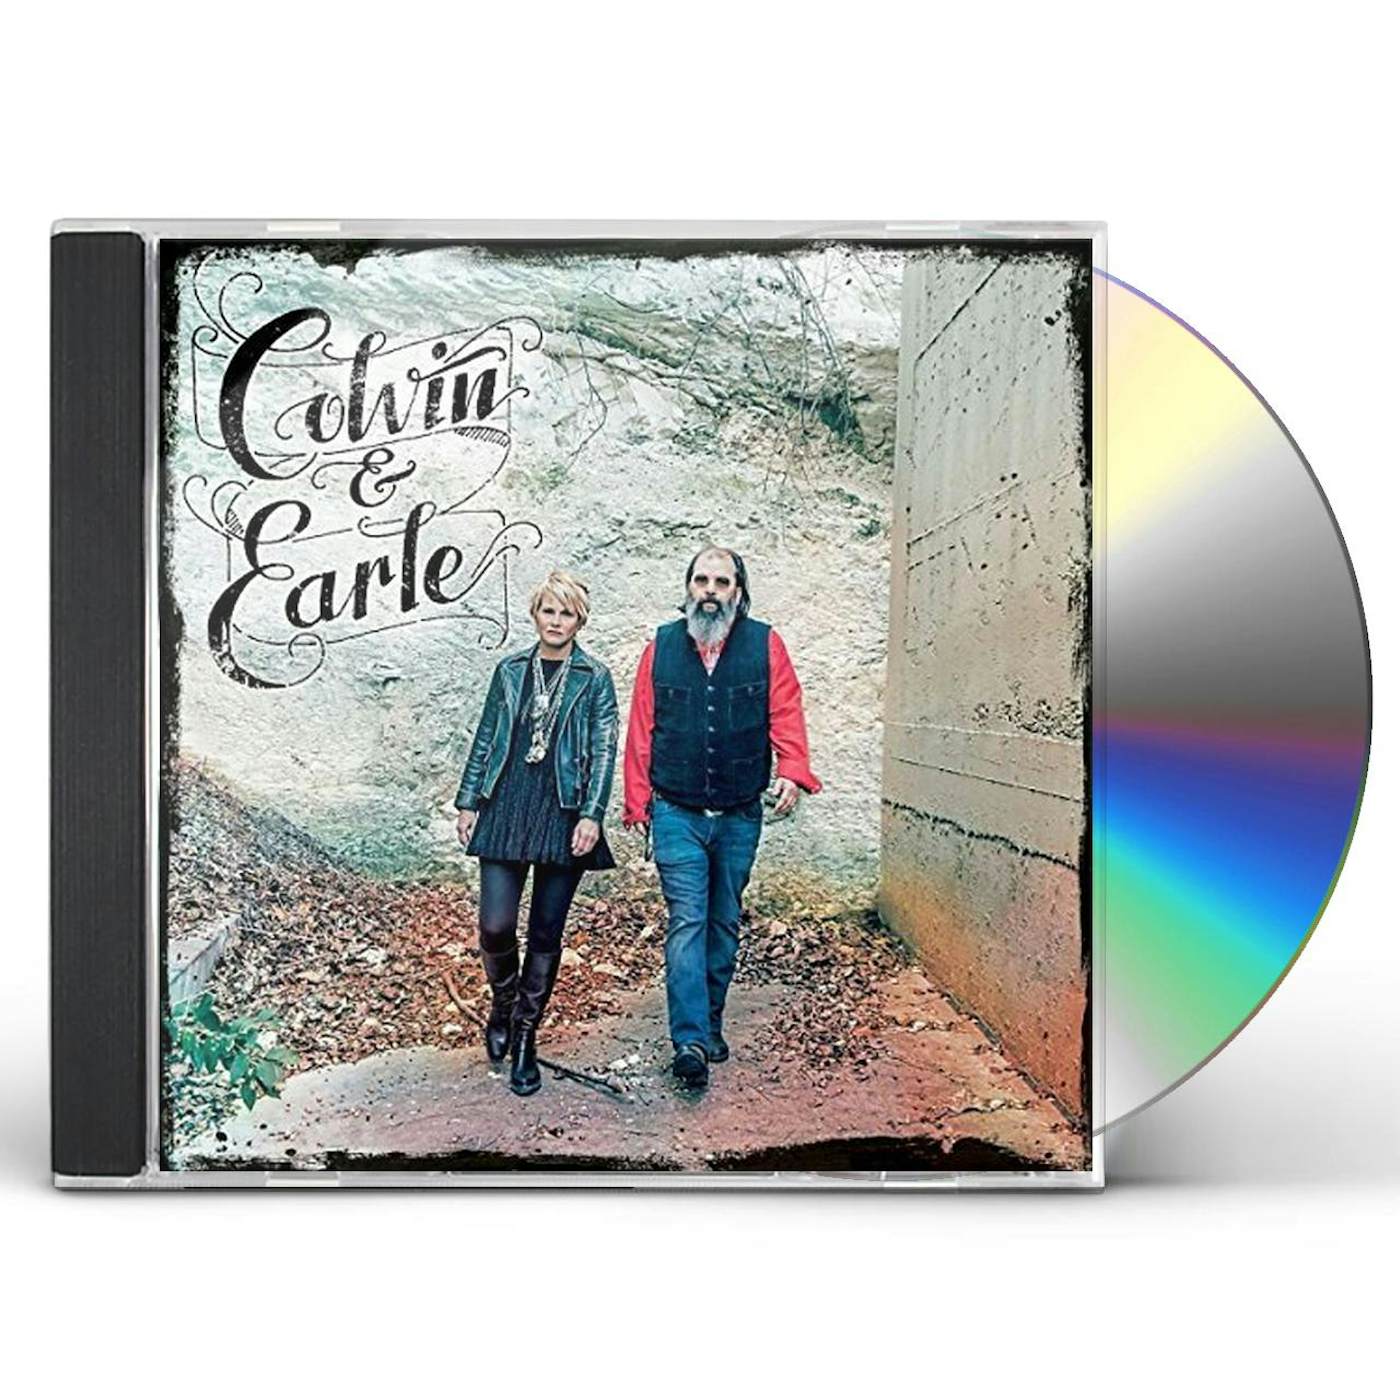 COLVIN & EARLE CD